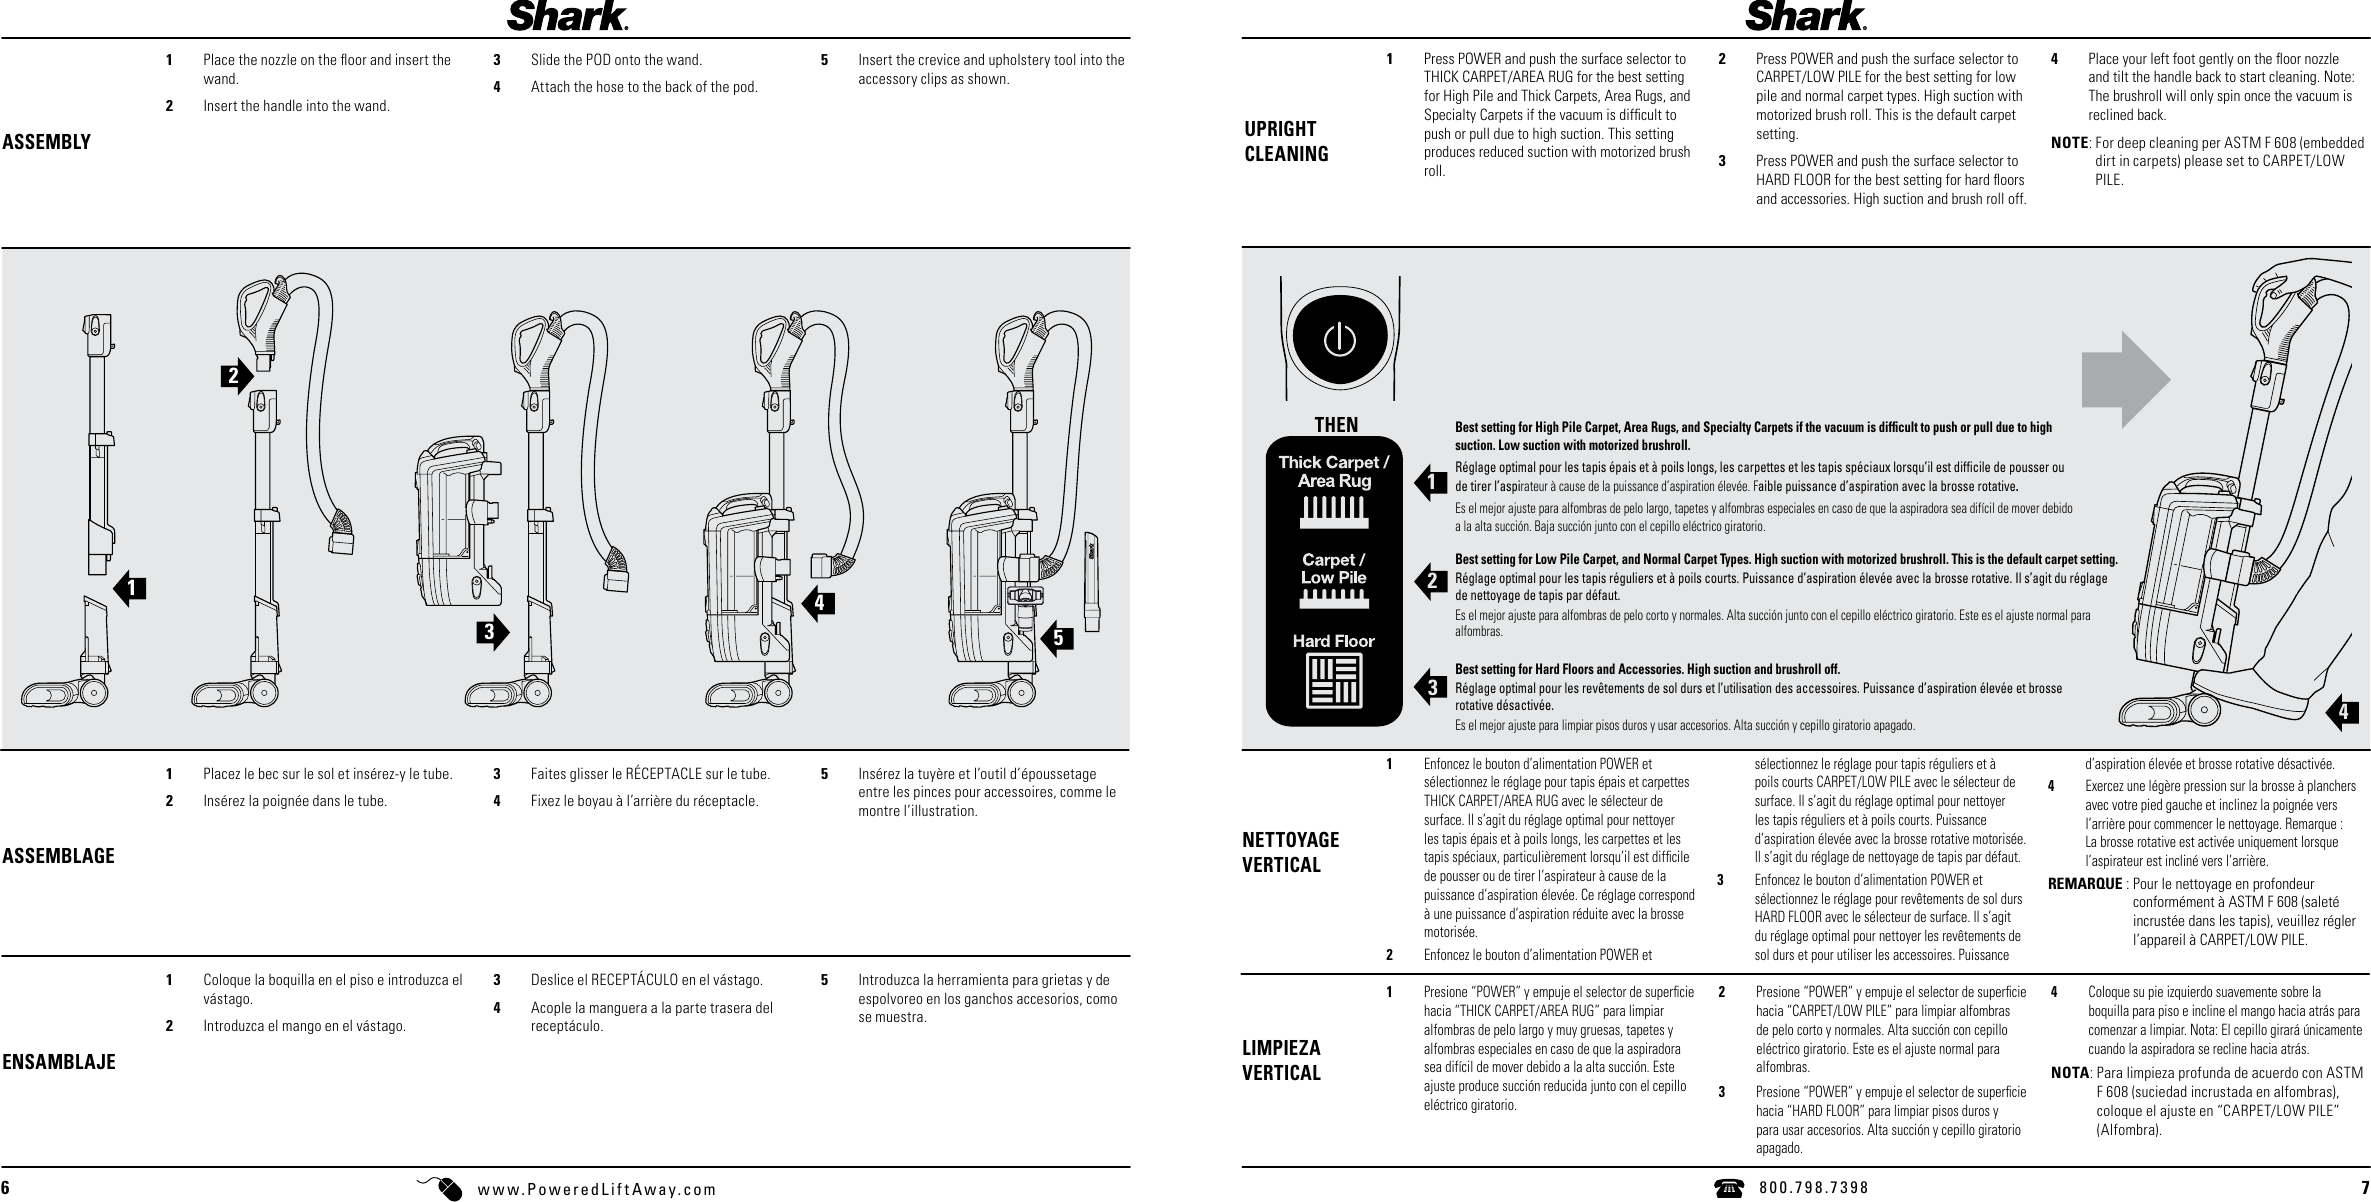 Page 4 of 11 - Shark Shark-Shark-Rotator-Powered-Lift-Away-Upright-Vacuum-Nv650W-Owners-Guide-  Shark-shark-rotator-powered-lift-away-upright-vacuum-nv650w-owners-guide